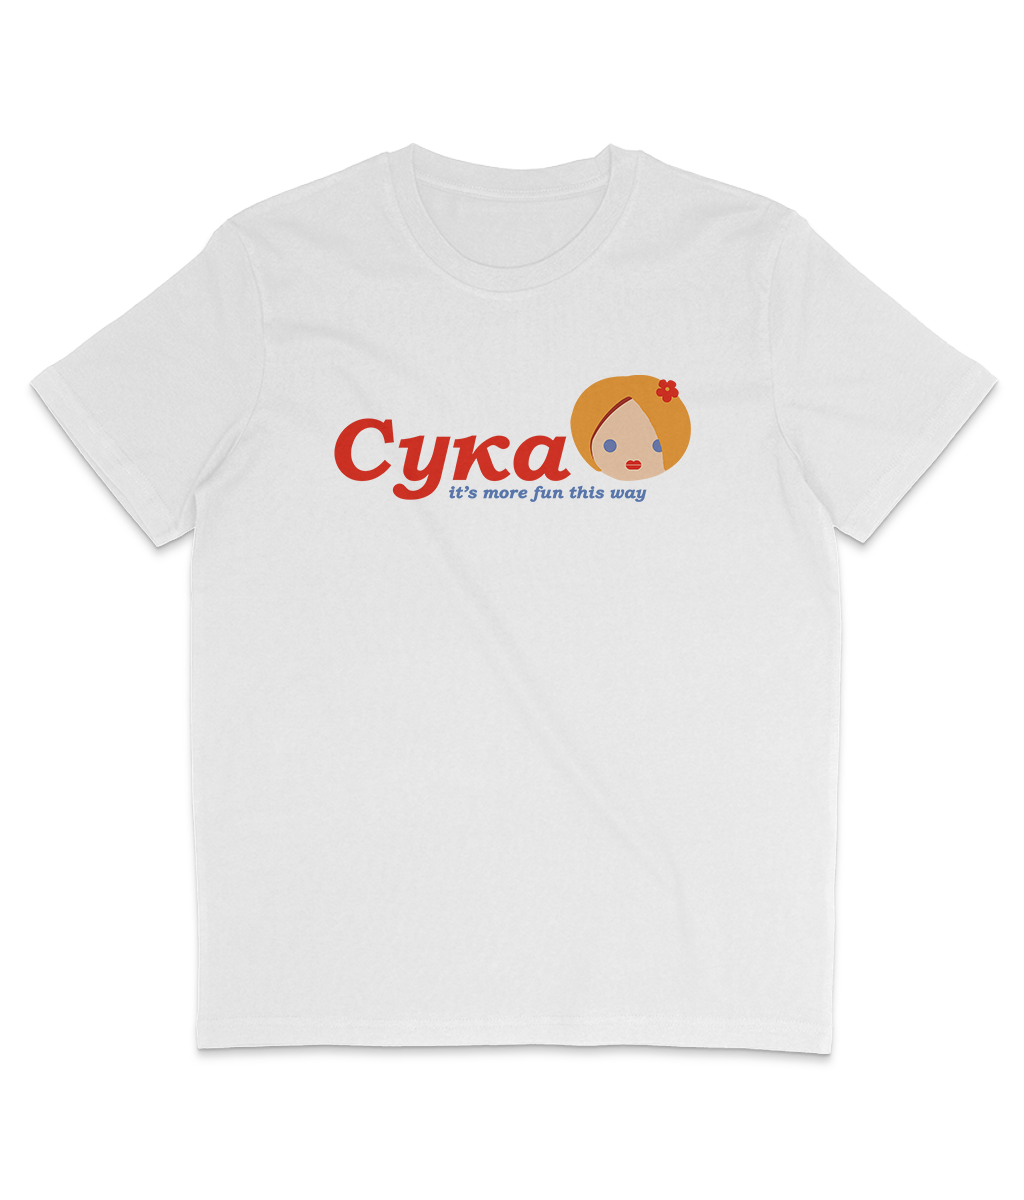 Cyka - it's more fun this way